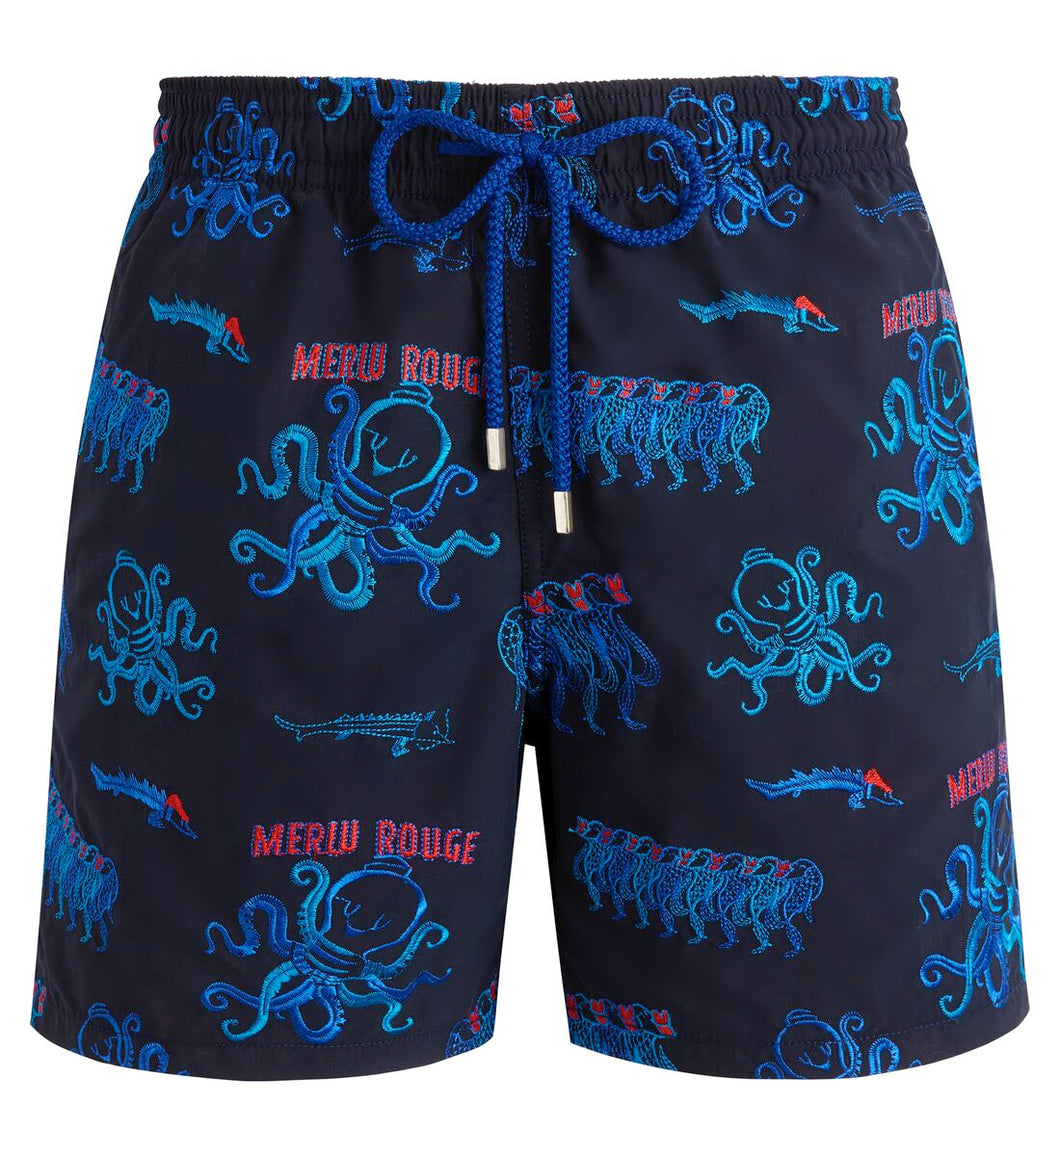 Swim Shorts Embroidered Au Merlu Rouge - Limited Edition